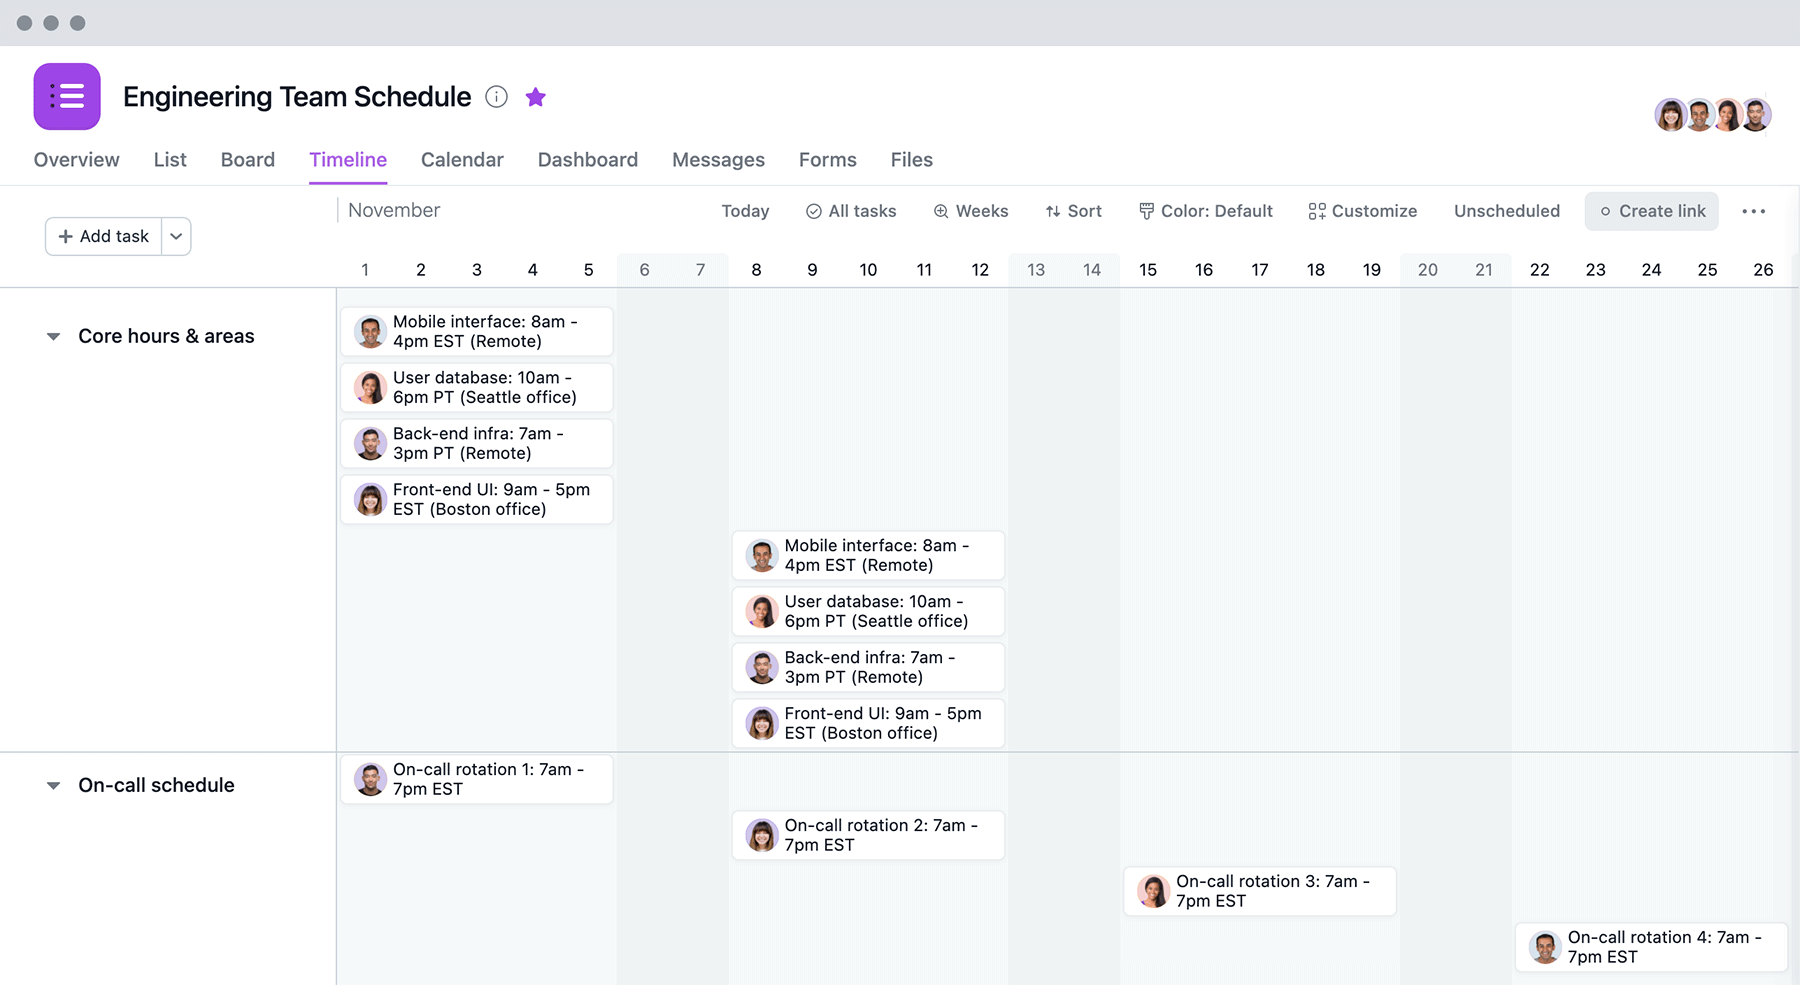 [Product UI] Engineering team schedule example (Calendar View)